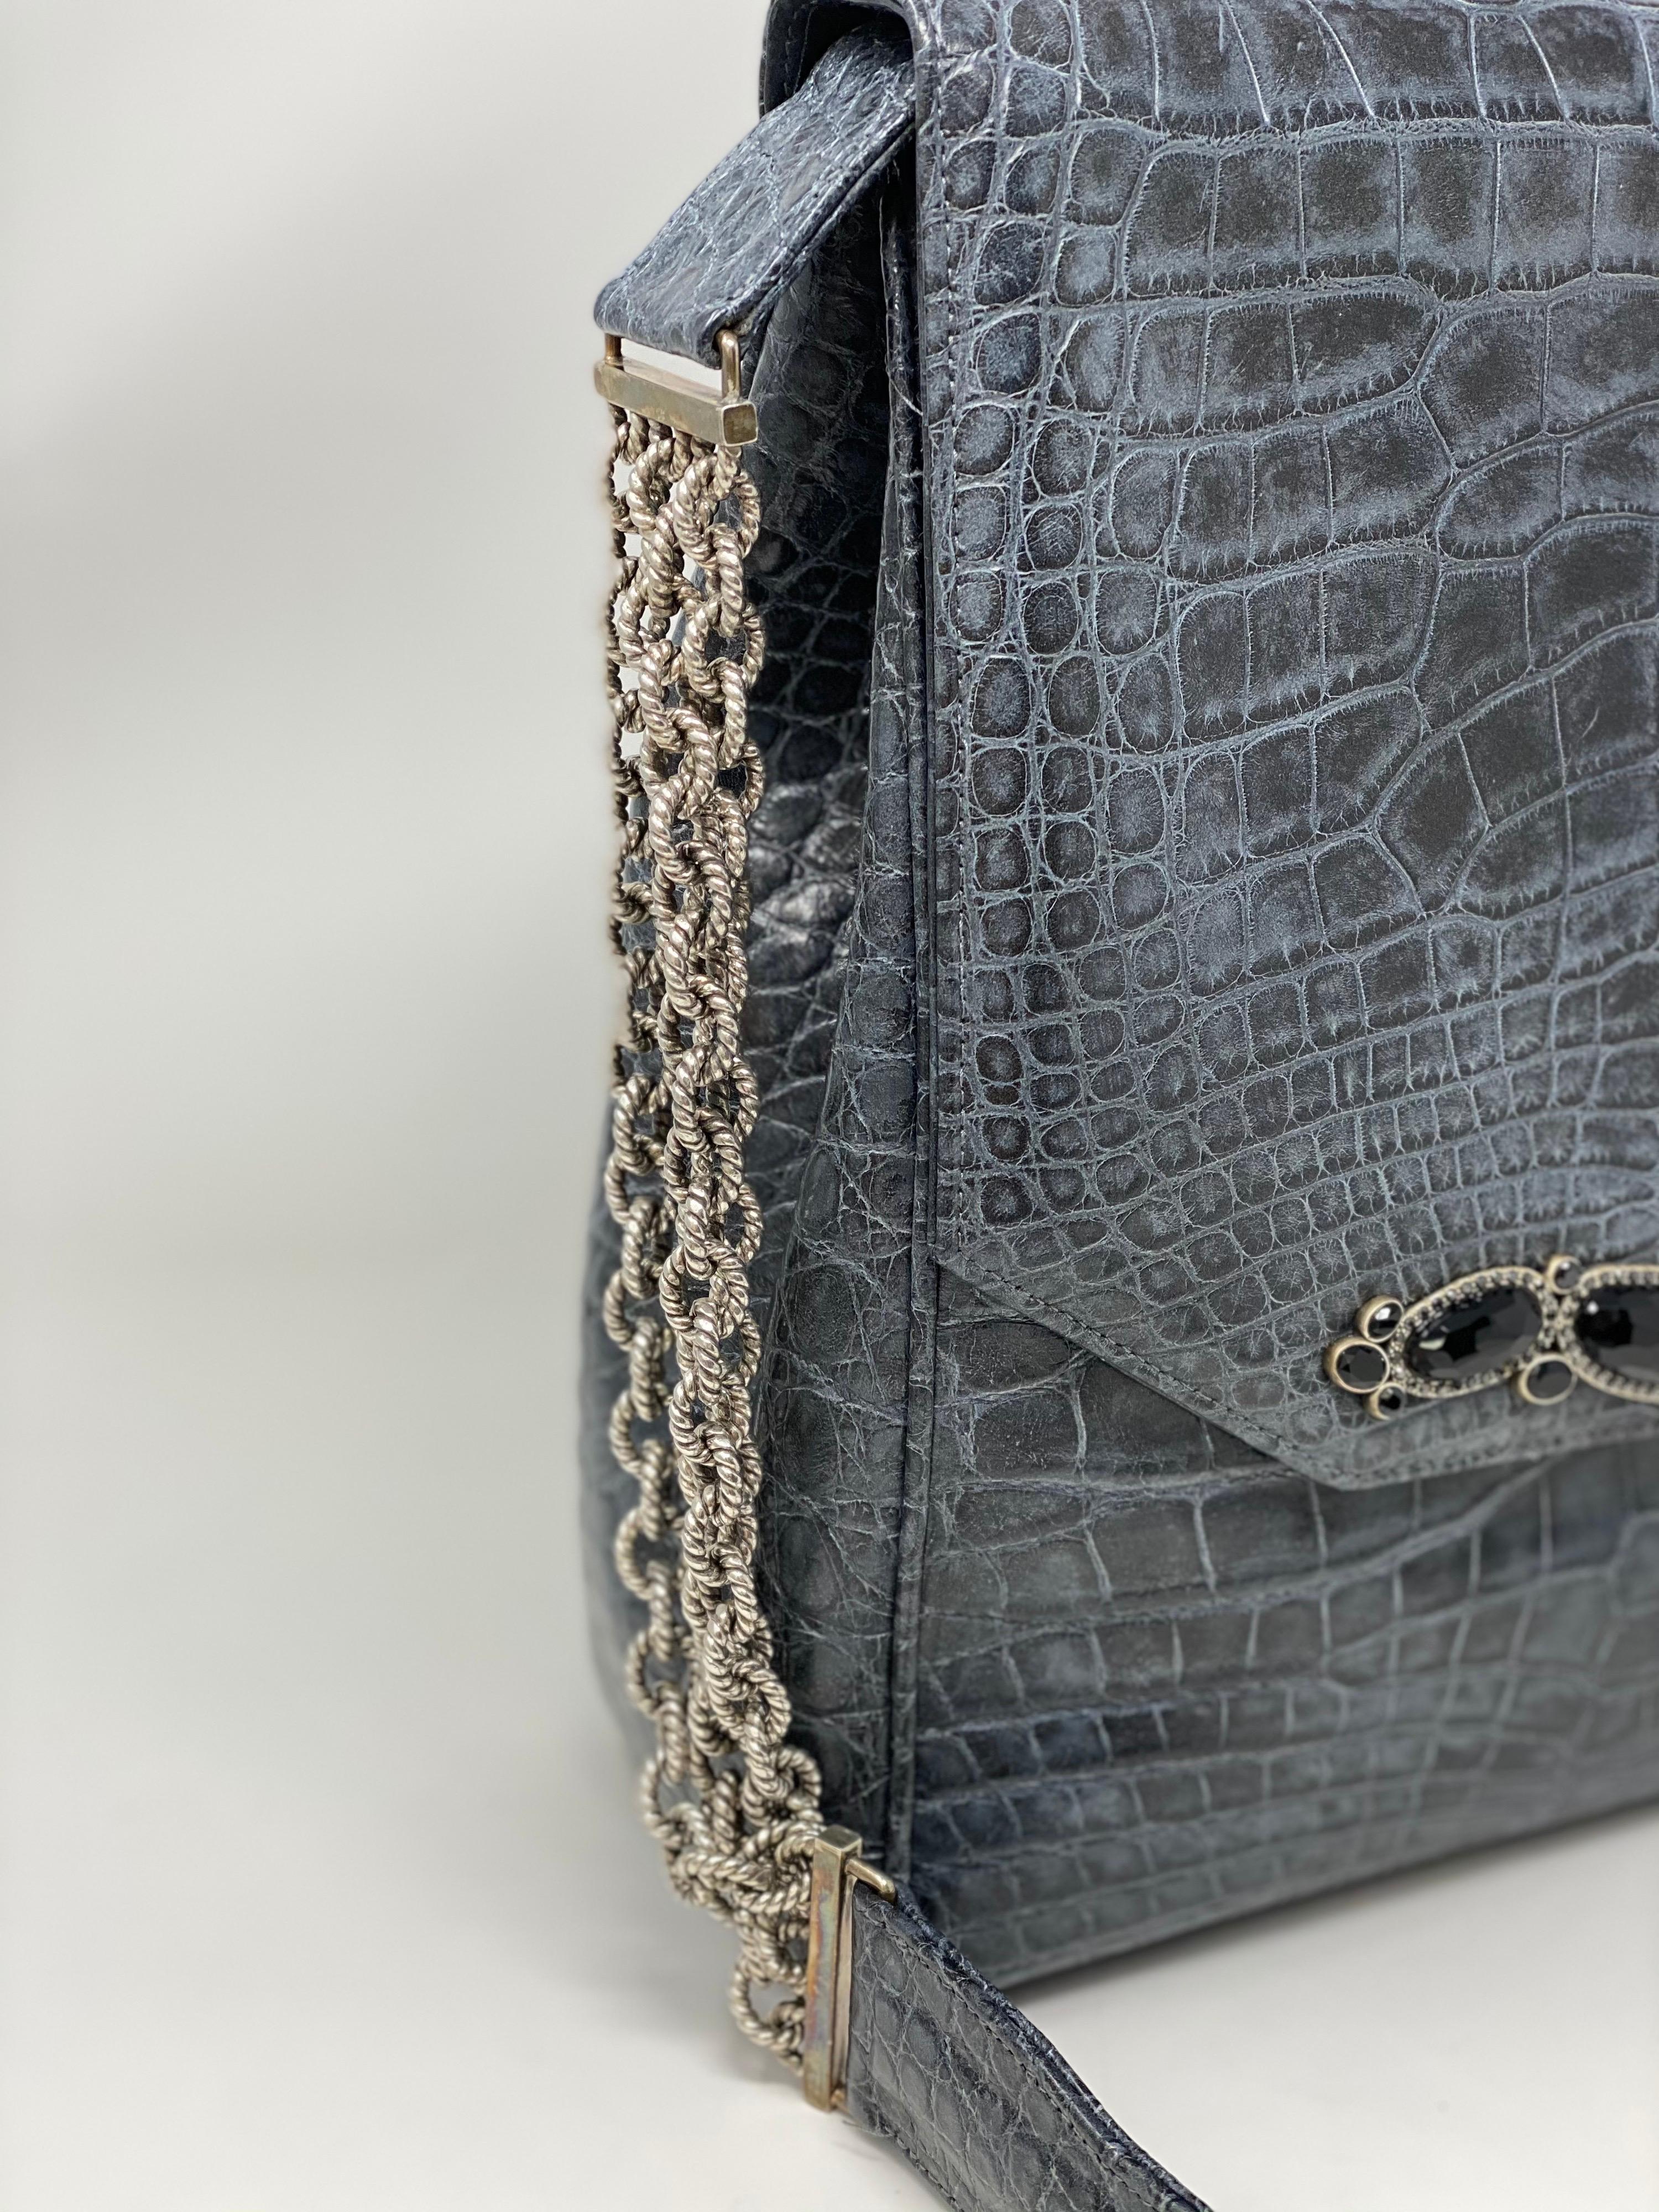 Jada Loveless Crocodile Bag. Beautiful jeweled handbag made of crocodile. Never used. Mint like new condition. Sterling silver chain. Guaranteed authentic. 